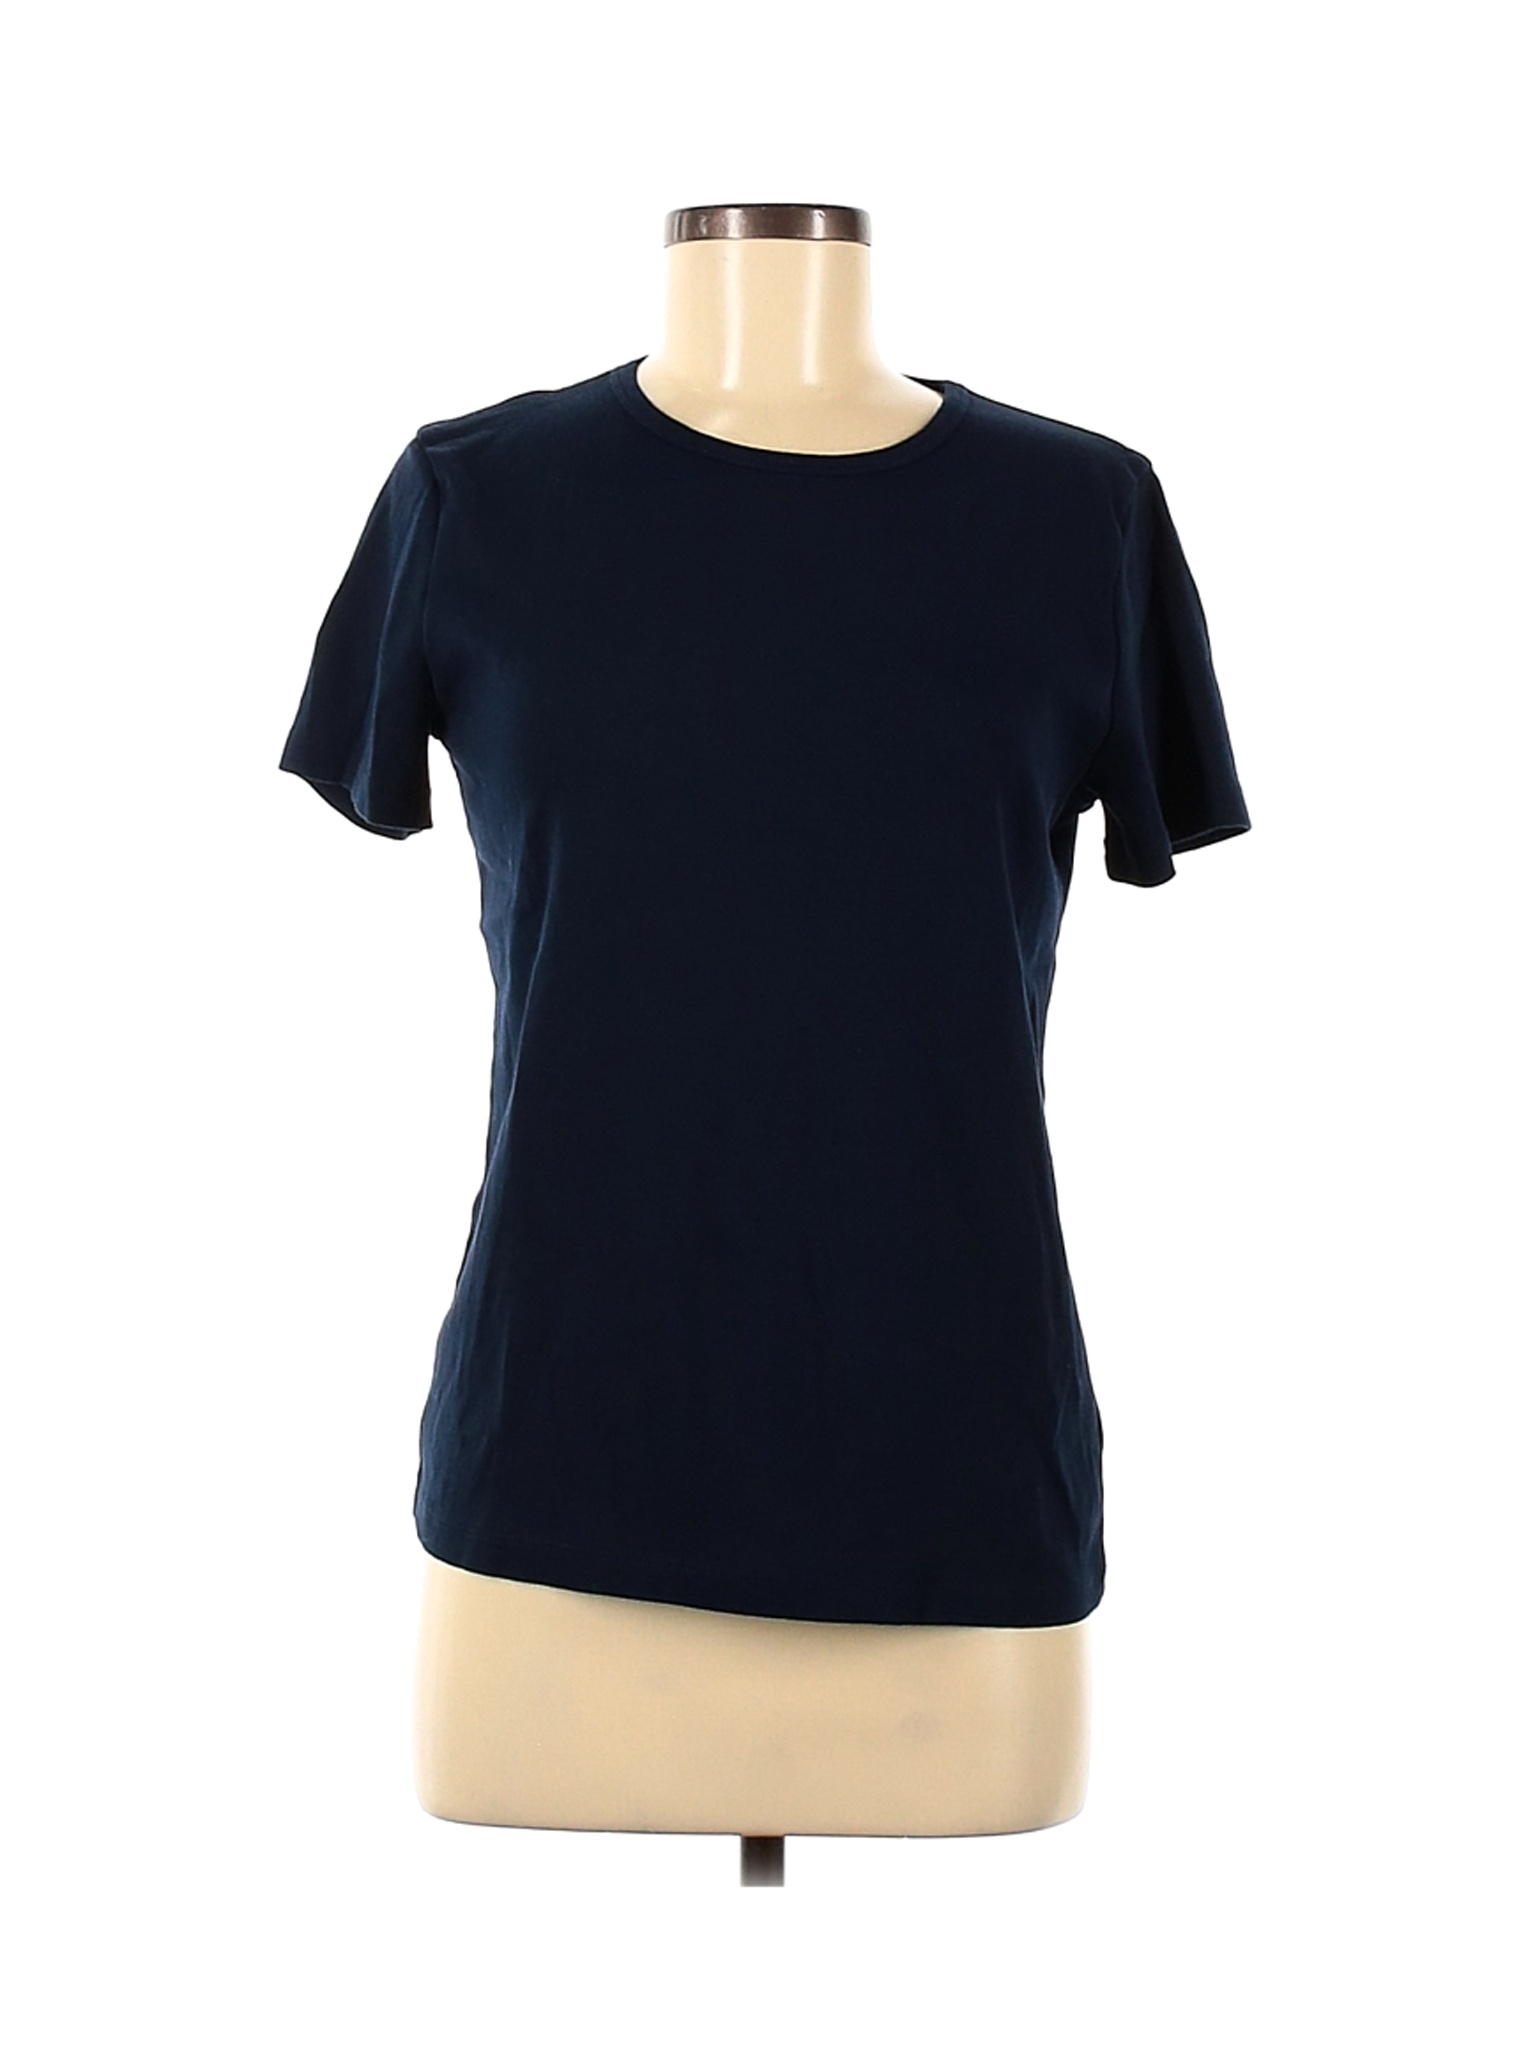 Jones New York Sport 100% Cotton Solid Blue Short Sleeve T-Shirt Size M ...